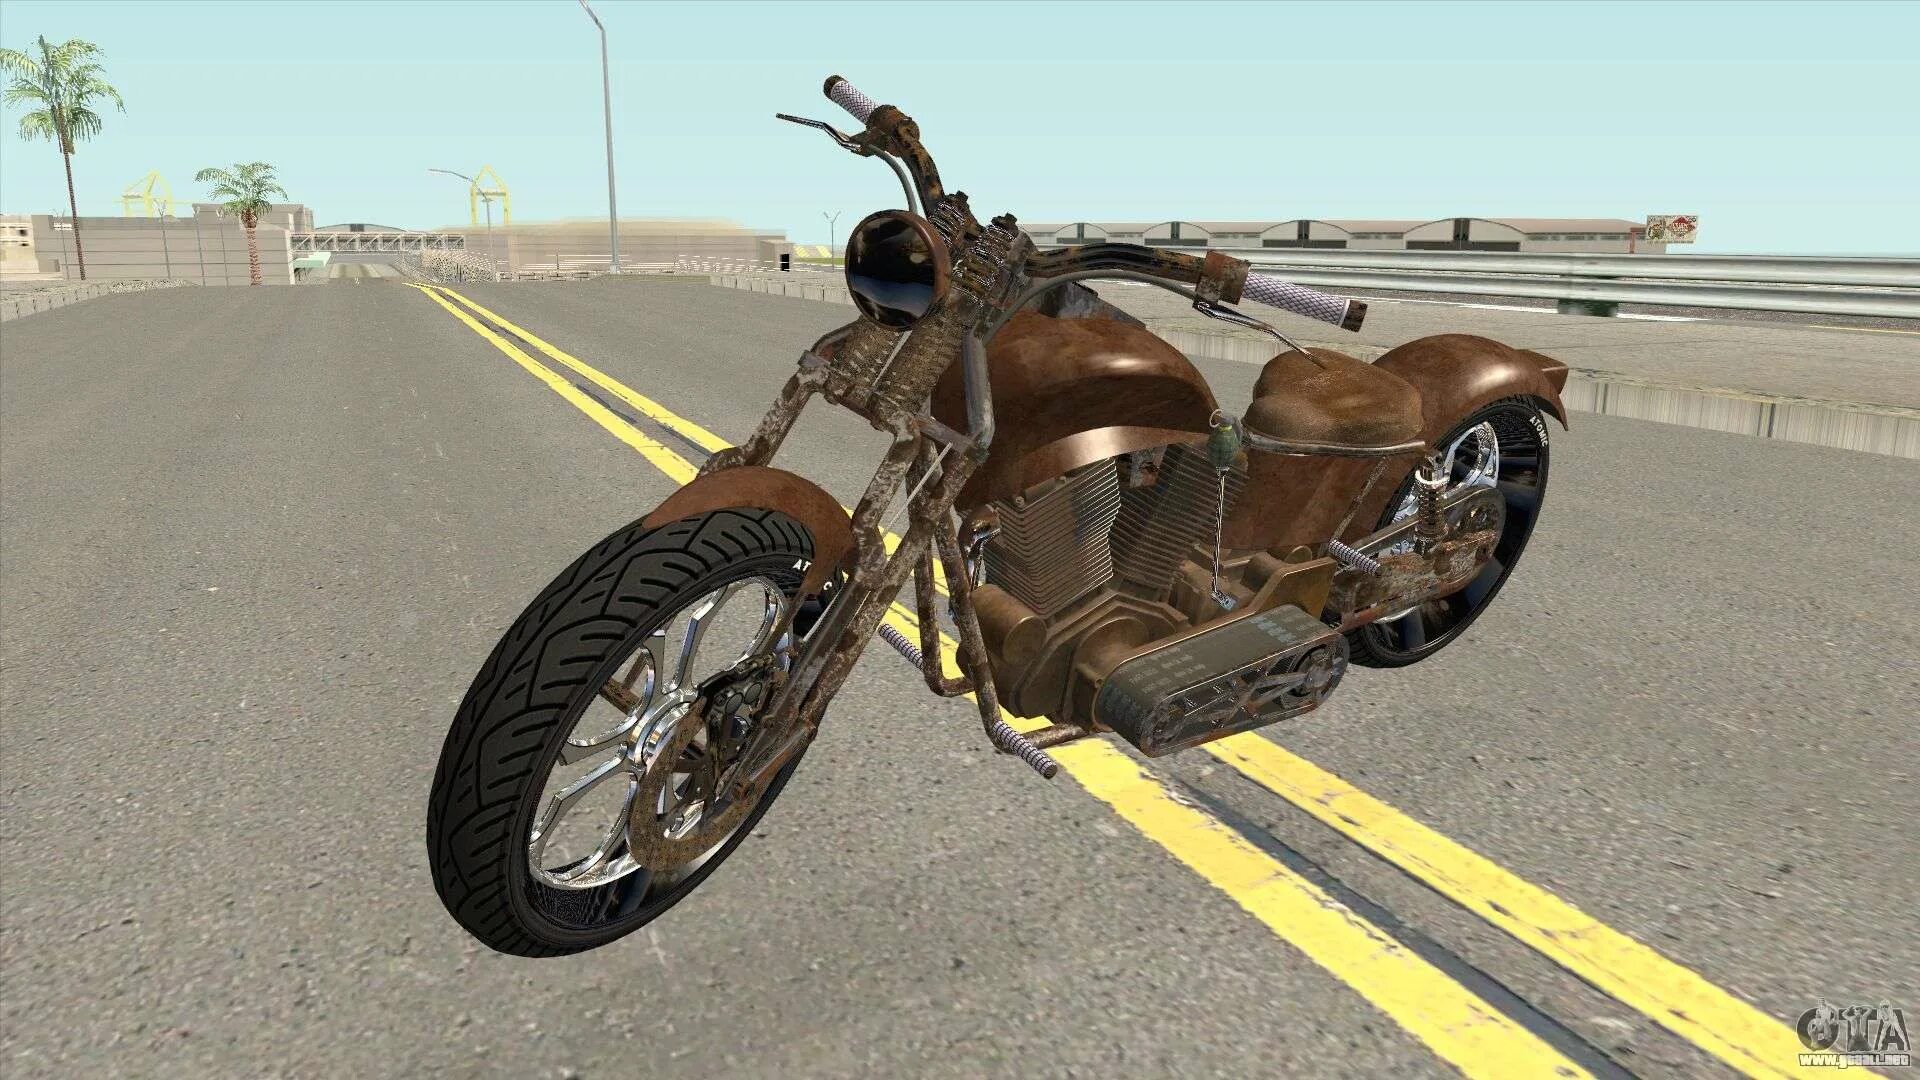 Rat Bike GTA 5. GTA San Andreas мотоциклы. Мотоцикл ГТА 5 Сан андреас. ГТА Сан андреас баба мотоцикл. Чит коды гта сан андреас мотоциклы